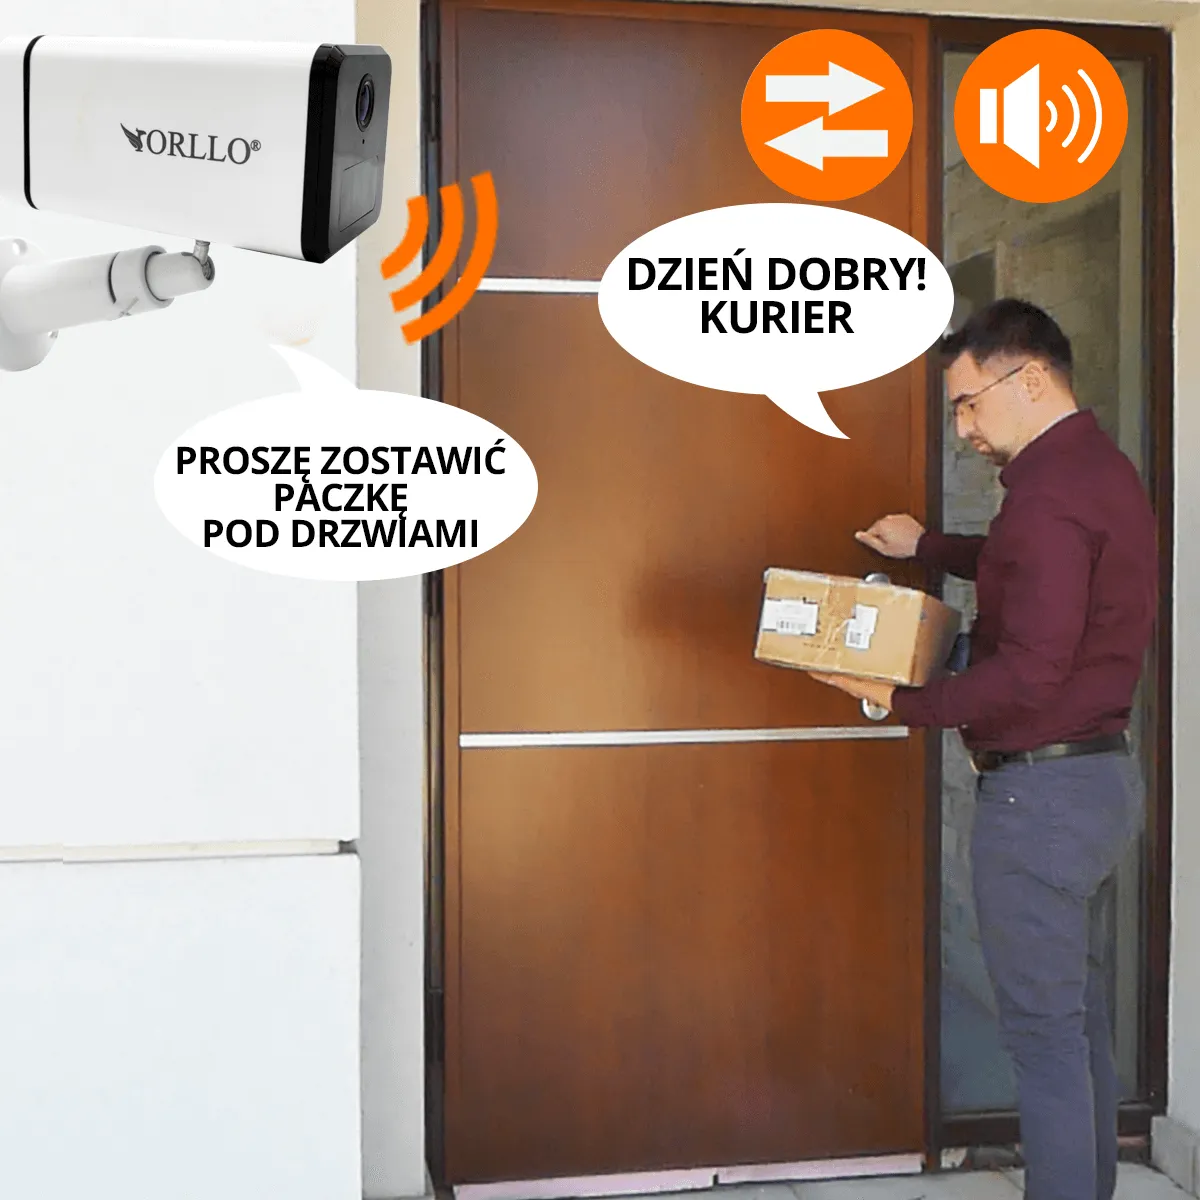 kamera GSM ip WiFi dwustronna komunikacja orllo.pl